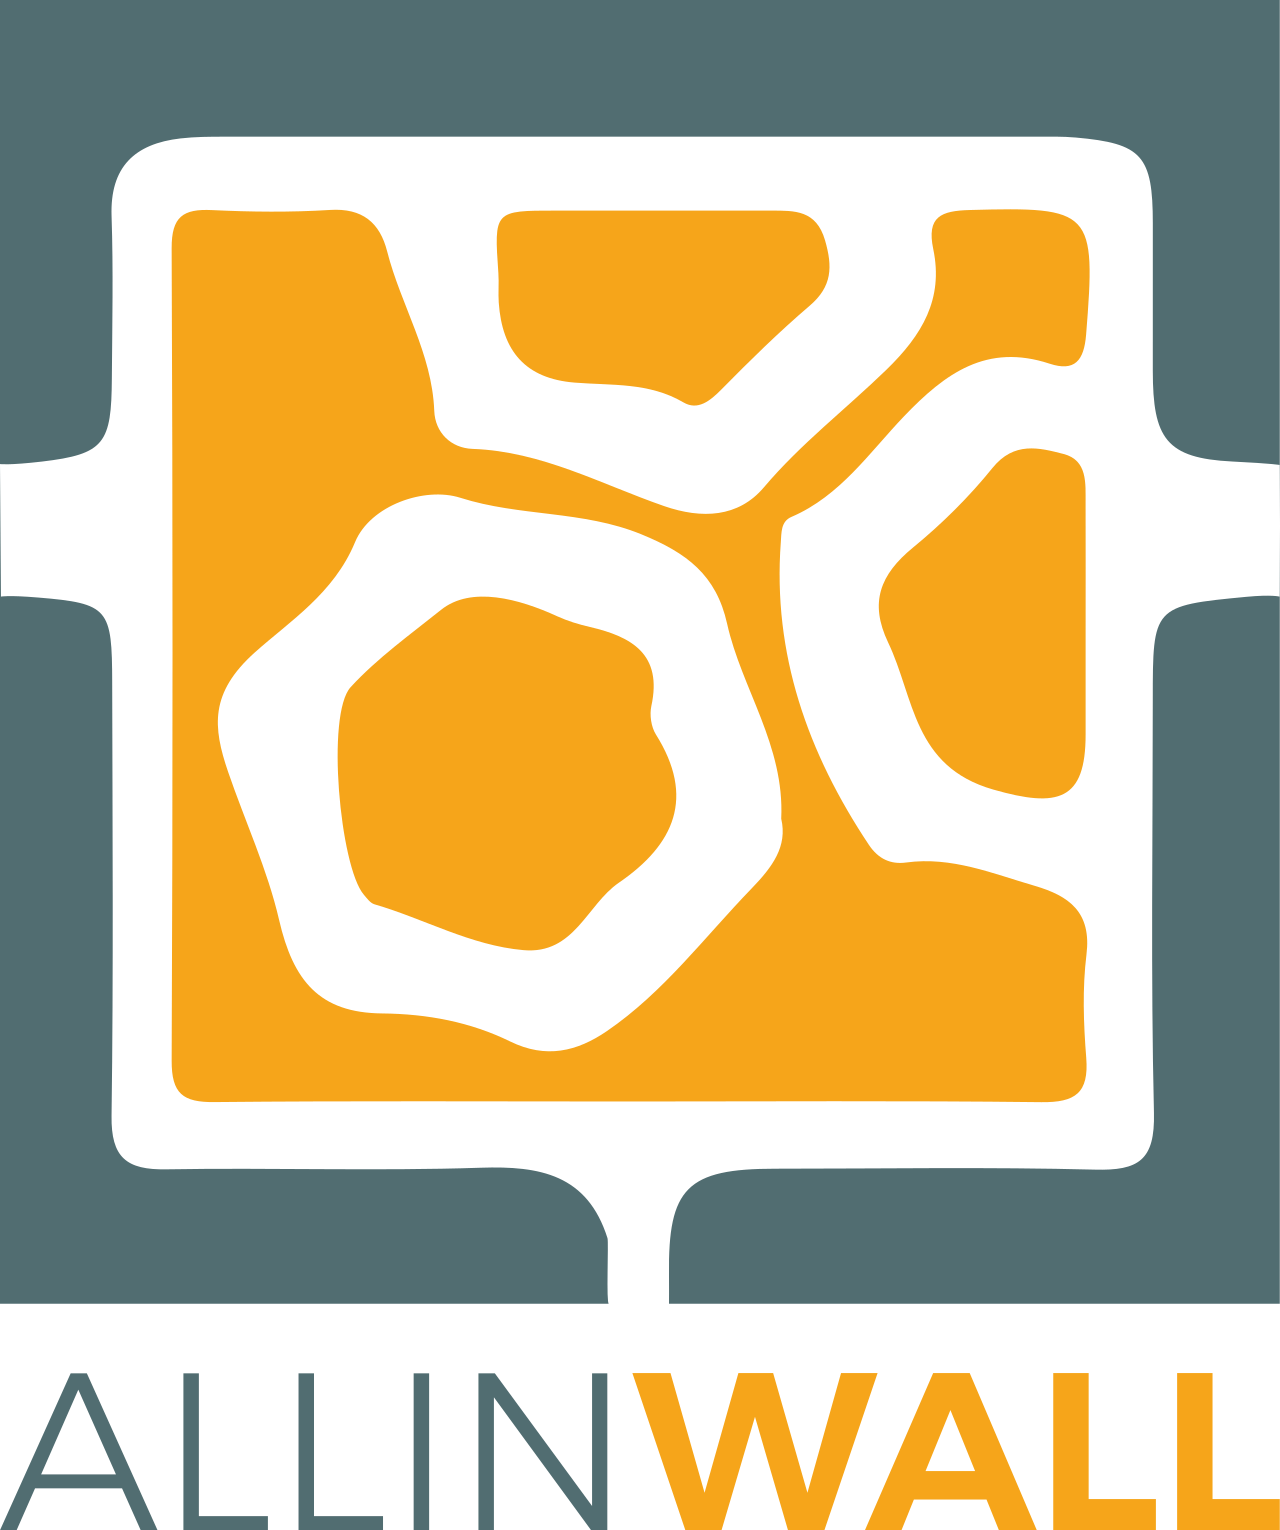 allinwall logo box dark